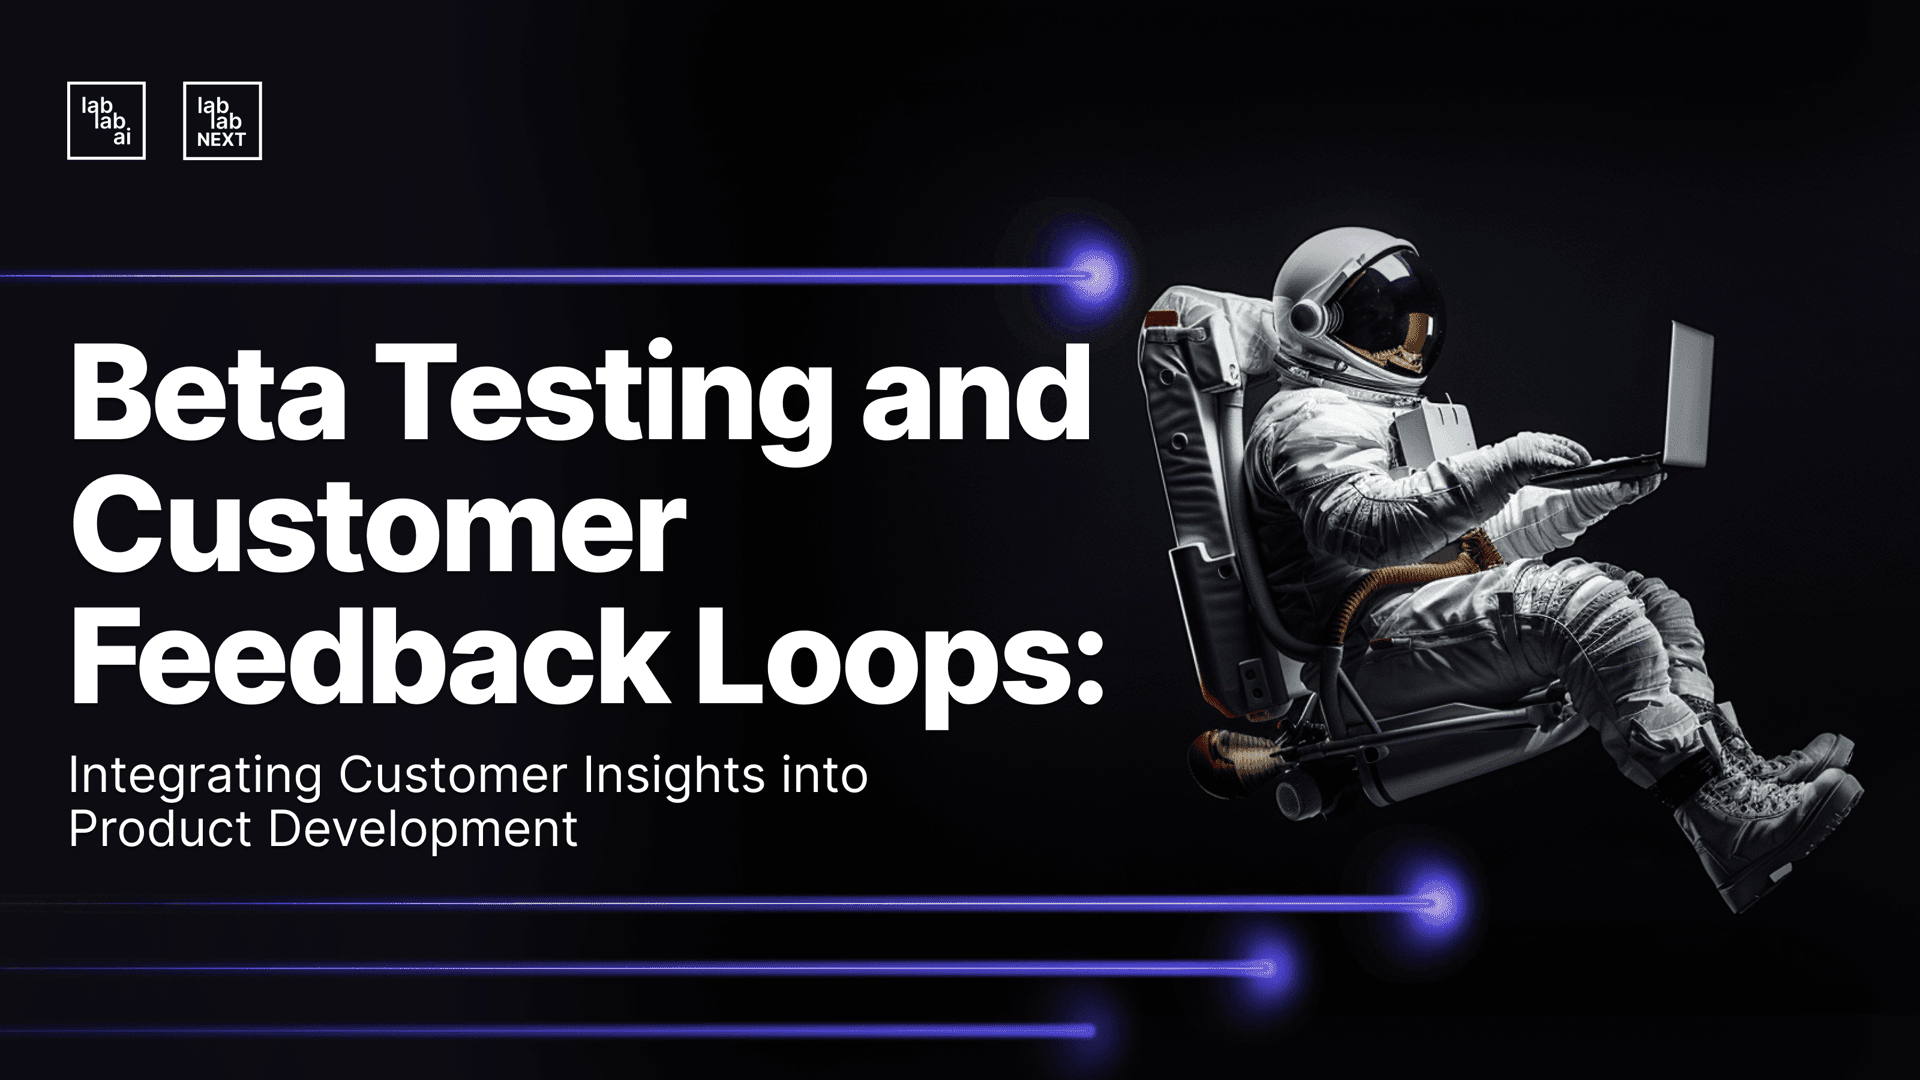 Beta Testing and Customer Feedback Loops: Integrating Customer Insights into Product Development